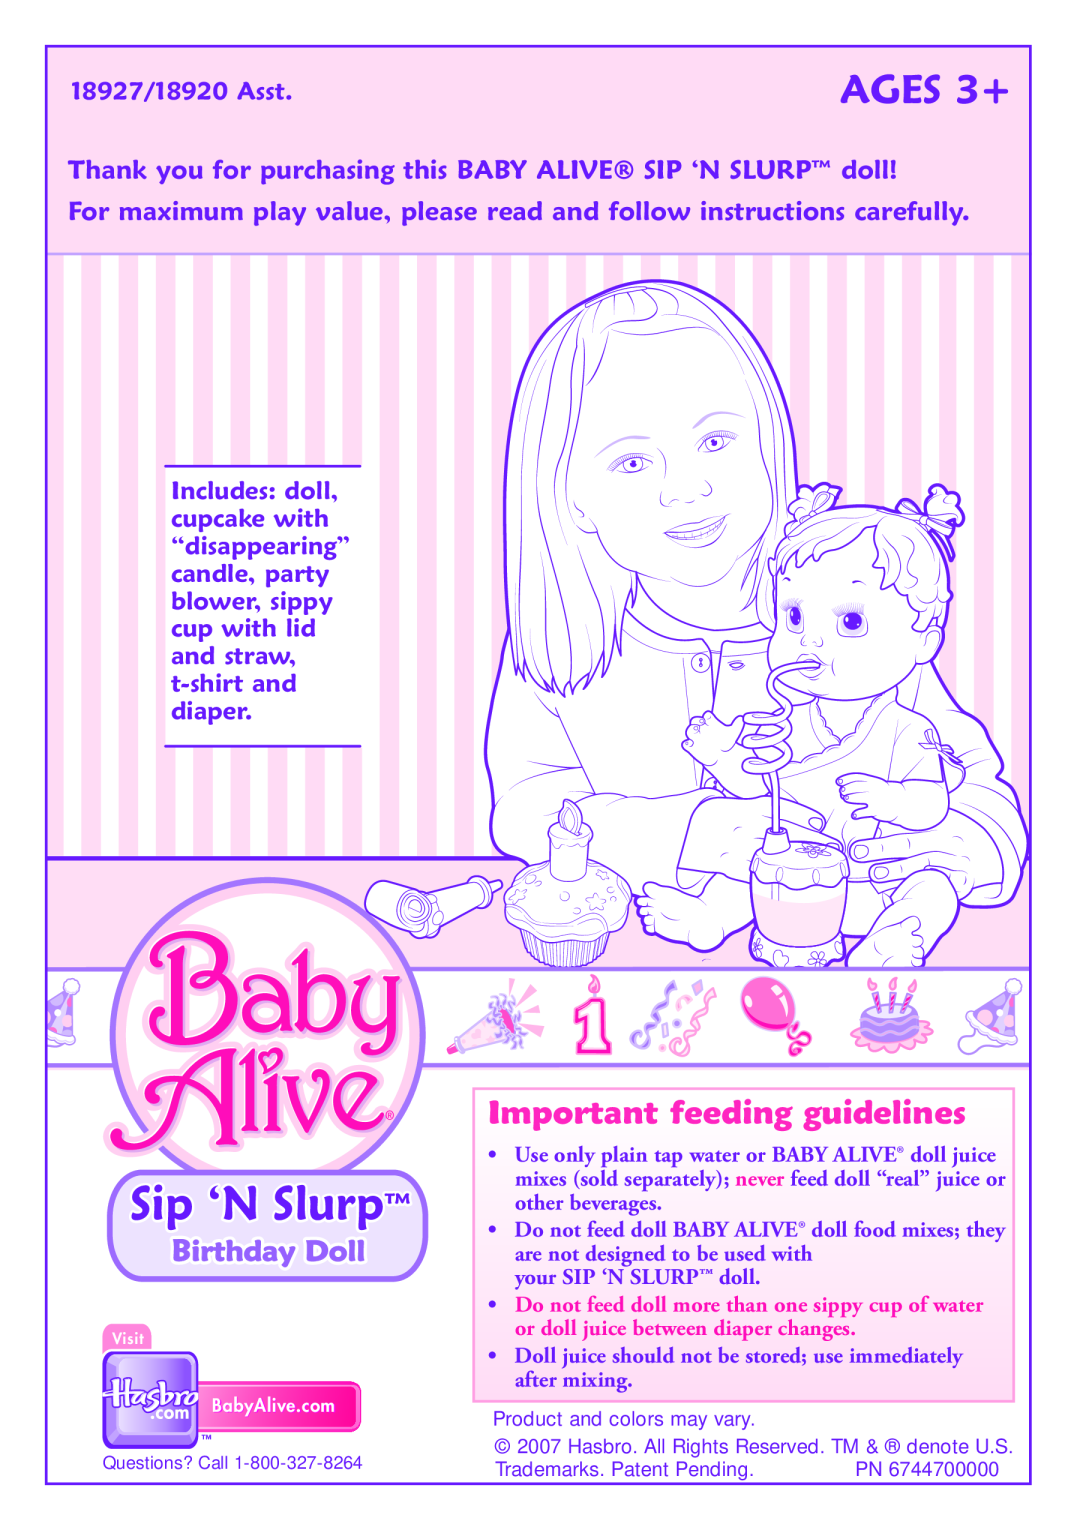 Hasbro manual Sip ‘N Slurp, AGES 3+, Important feeding guidelines, 18927/18920 Asst, Birthday Doll 